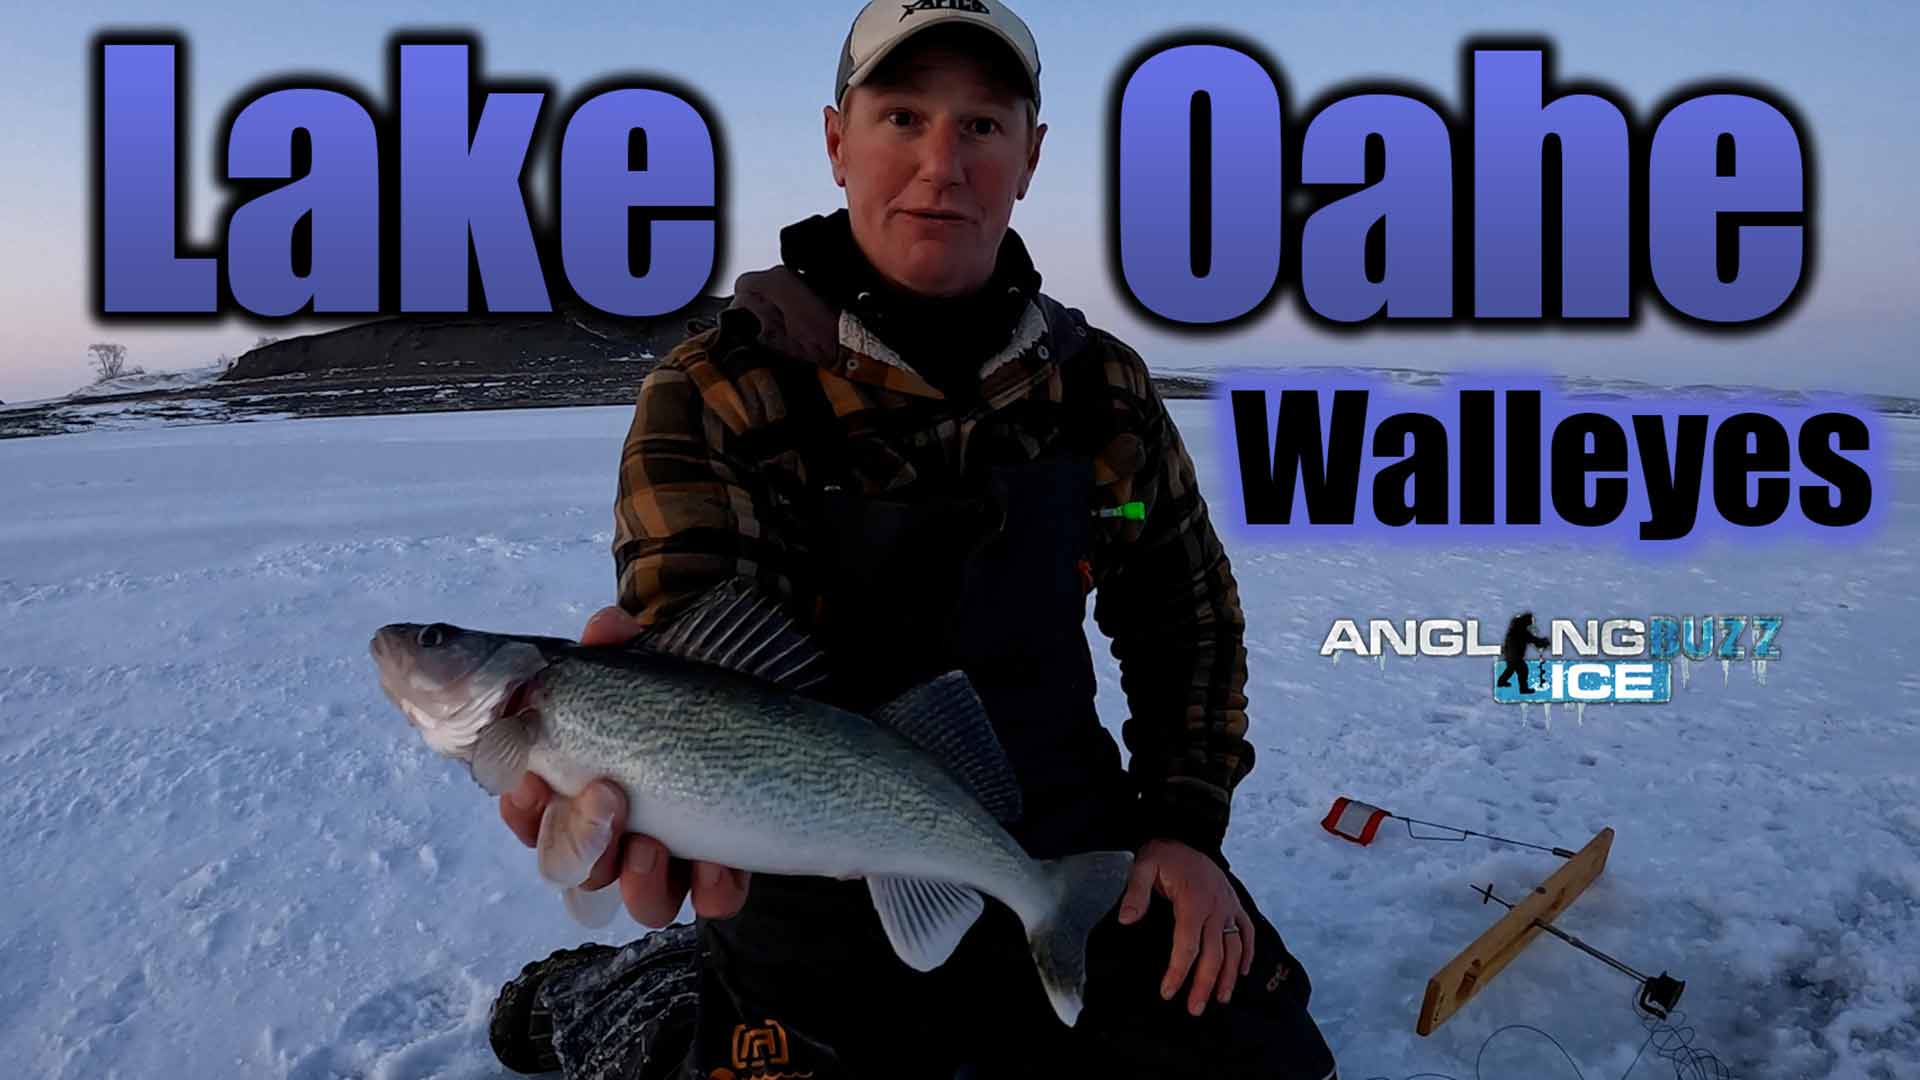 Lake Oahe walleyes